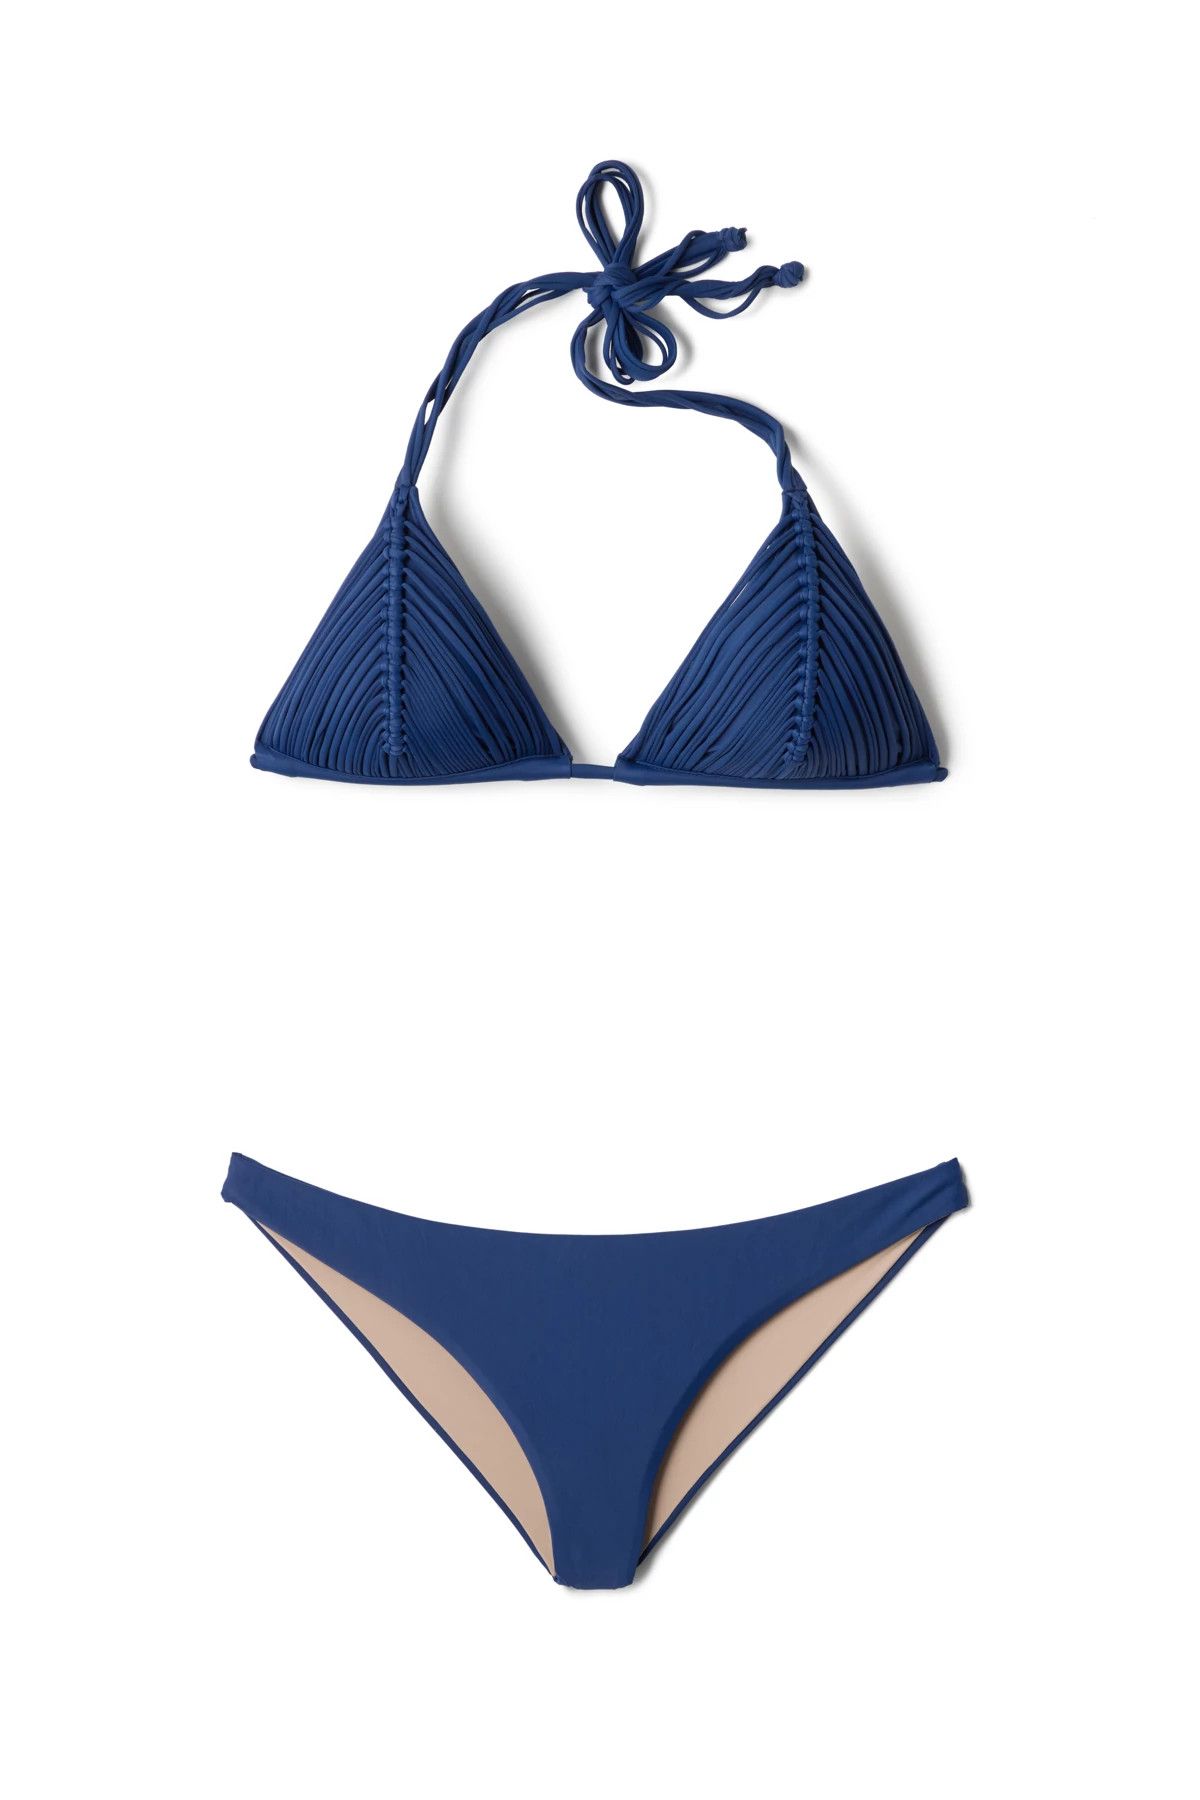 Isla Sliding Triangle Bikini Top | Everything But Water